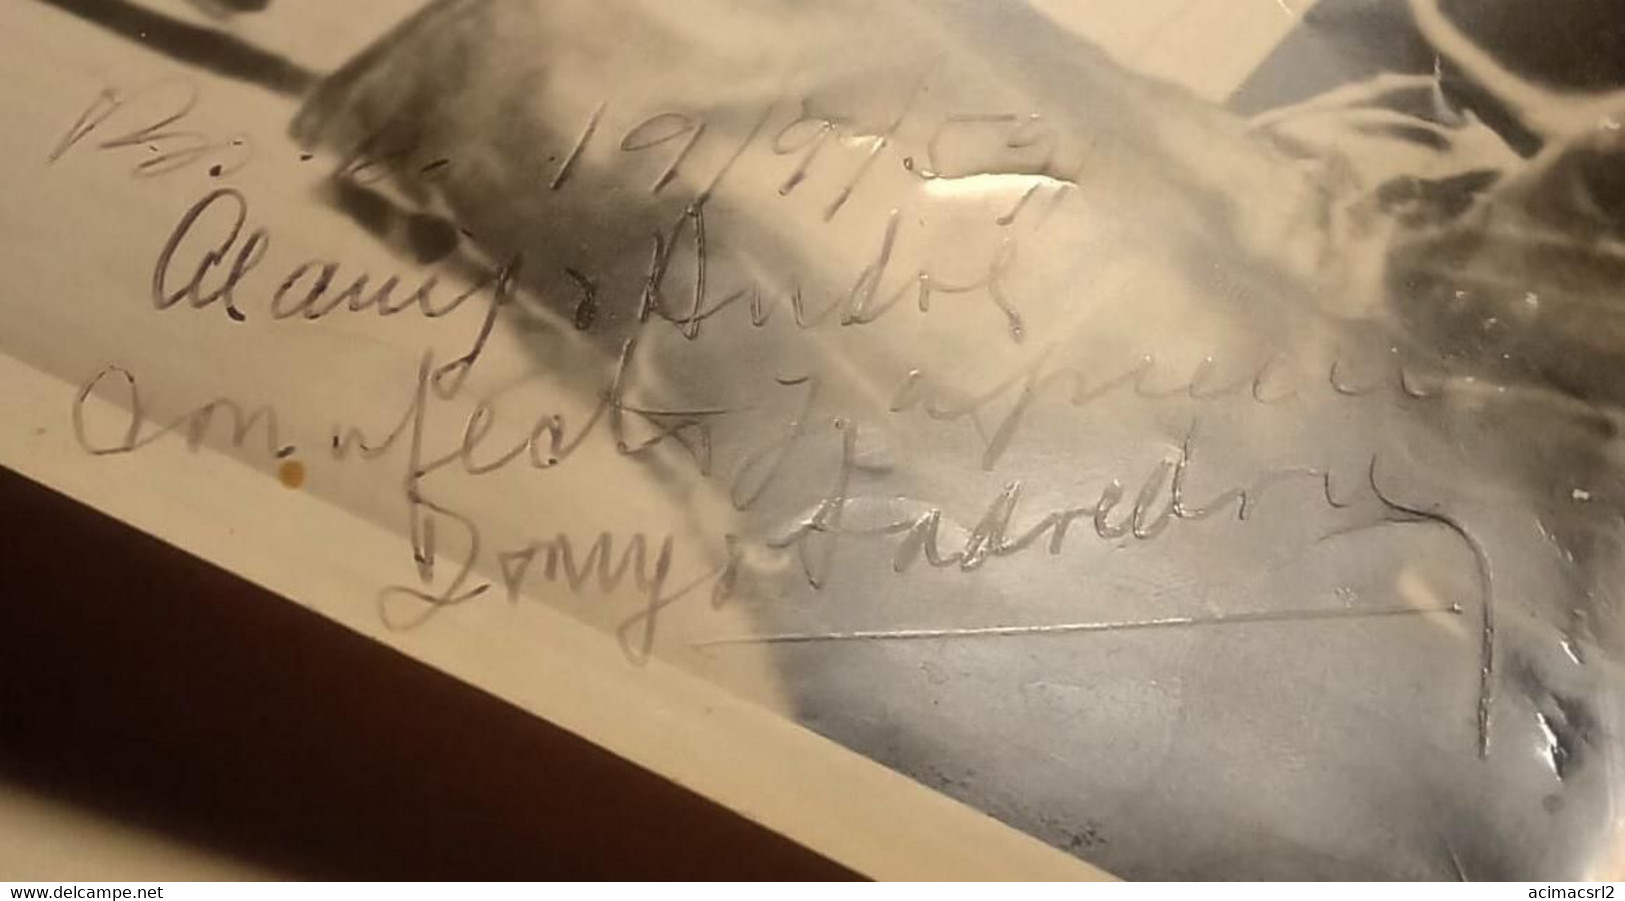 2484 - CAR RACING / DANY SAAVEDRA Pilot ?? Unidentified With Autograph Hand Signed Dedicace - BIG Photo 24x16cm 1959 - Foto Dedicate